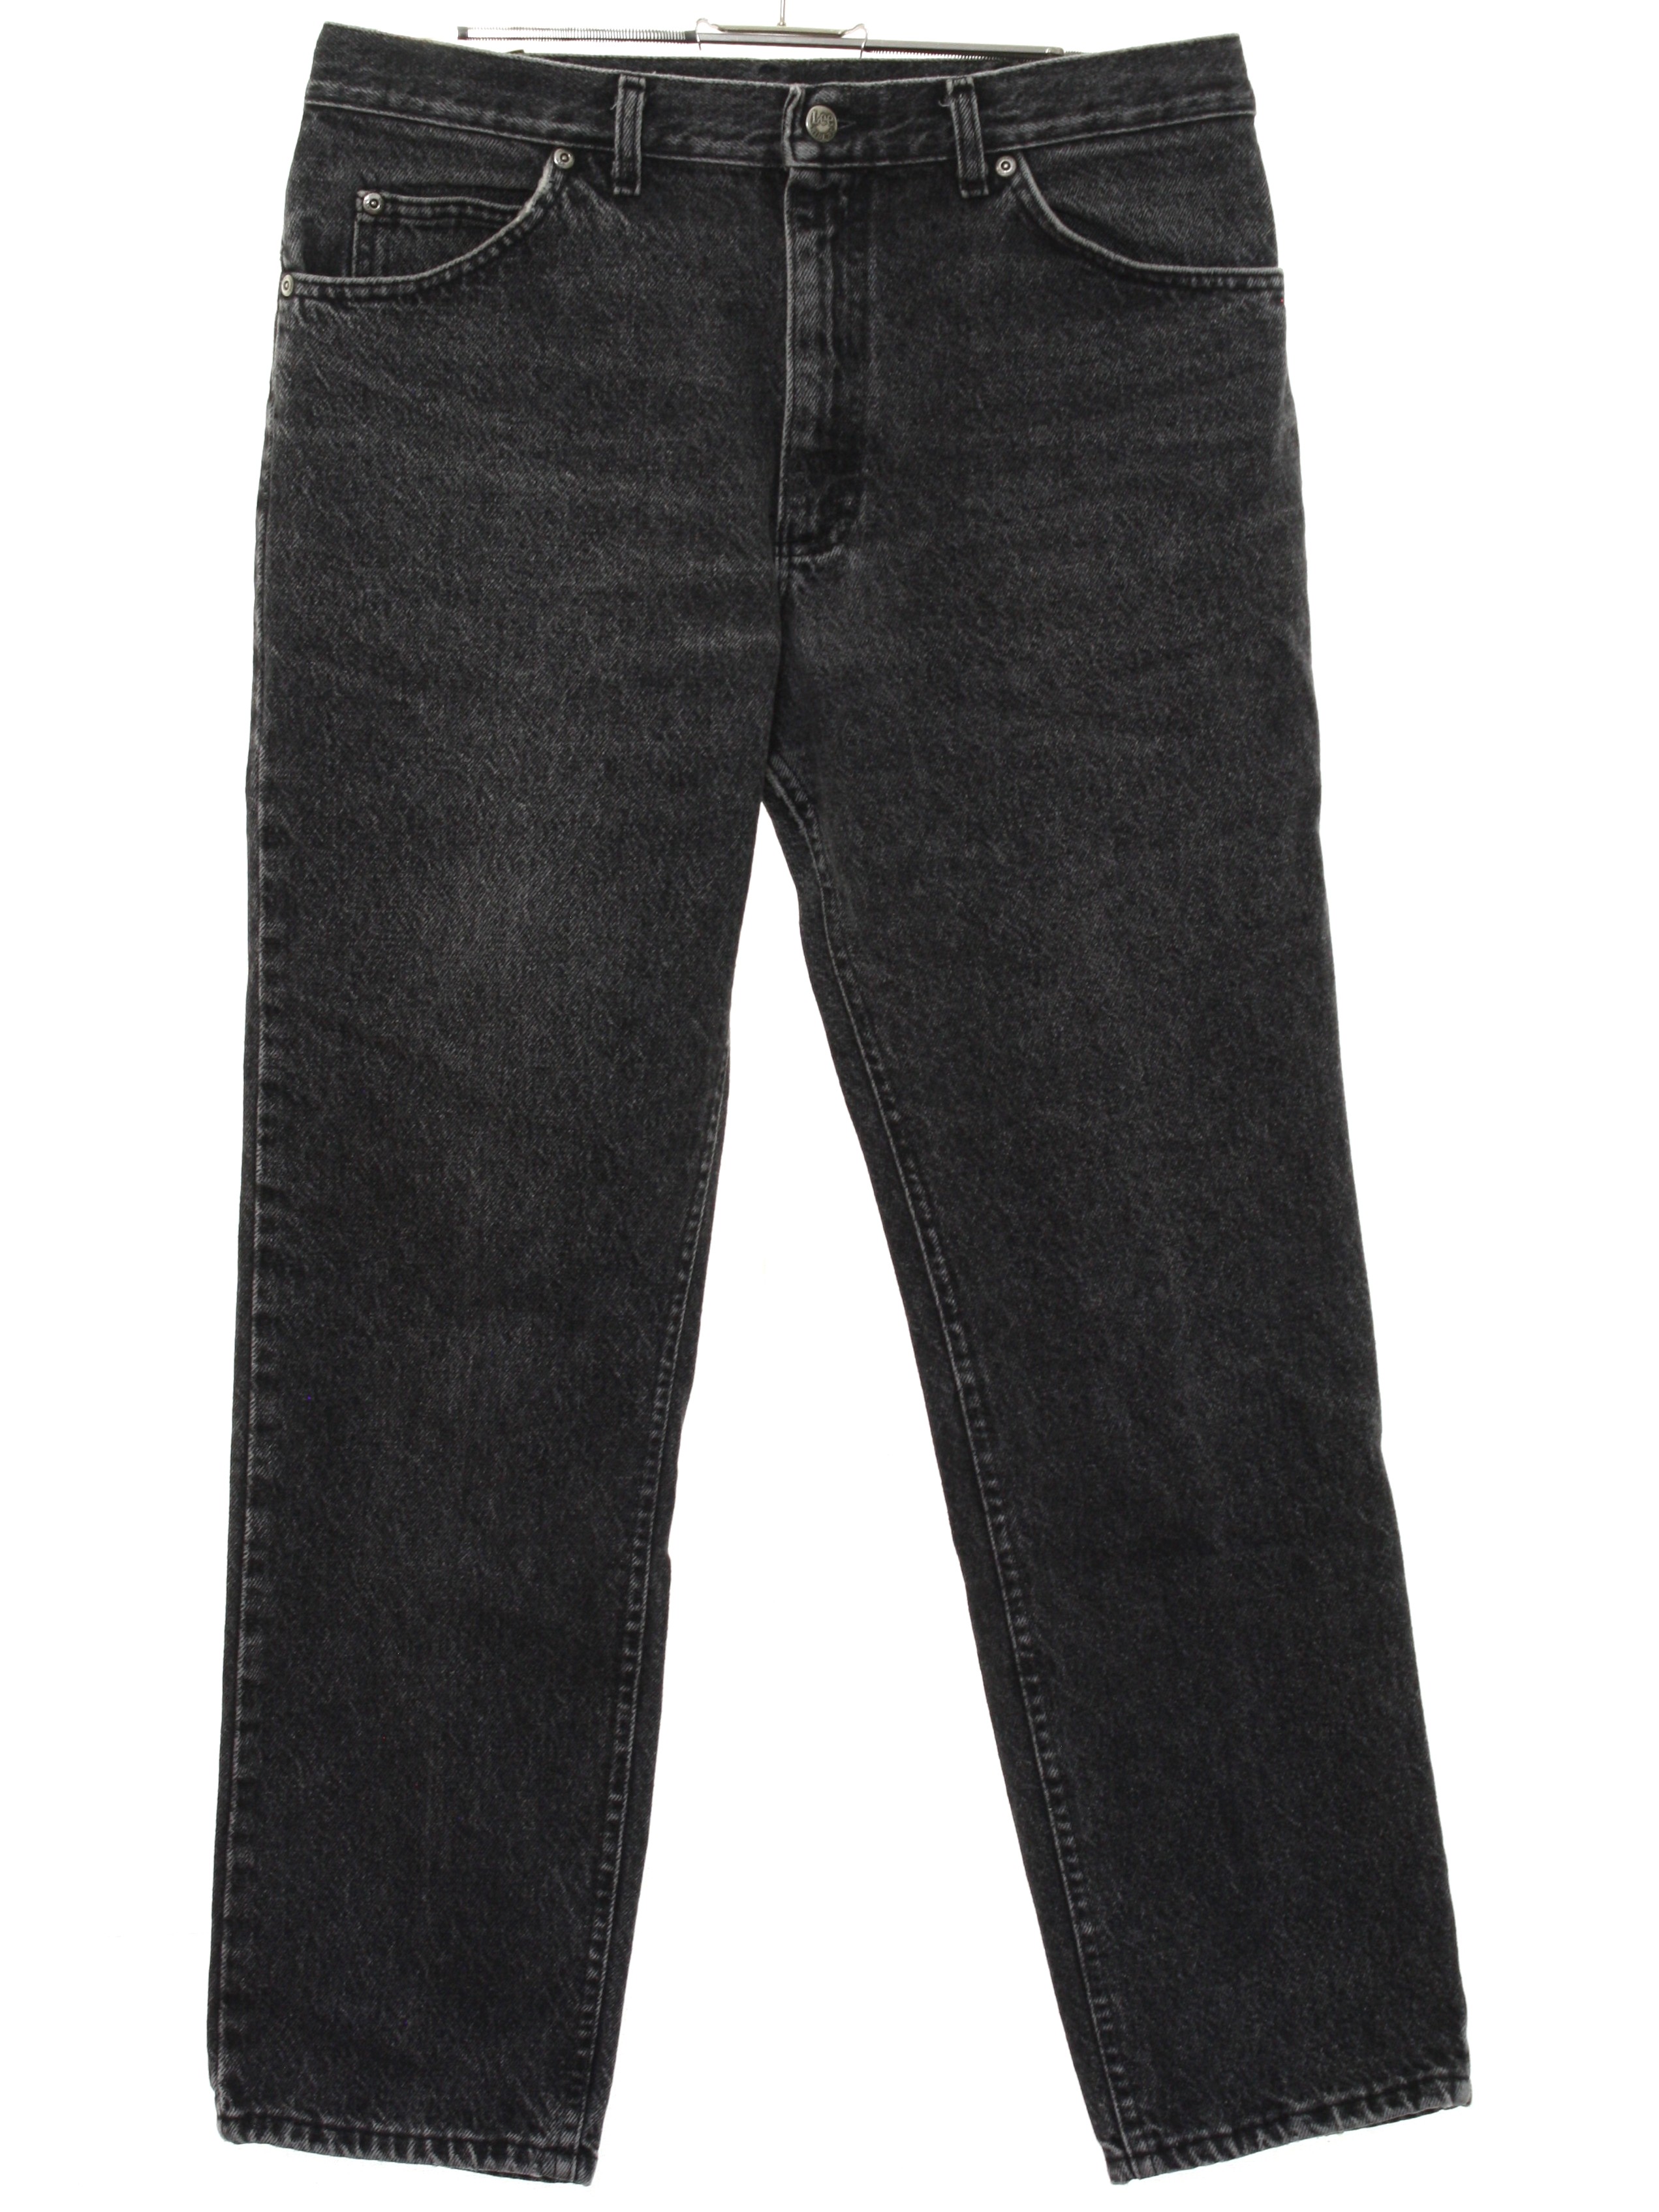 Retro 80s Pants (Lee) : 80s -Lee- Mens stone washed black cotton denim ...